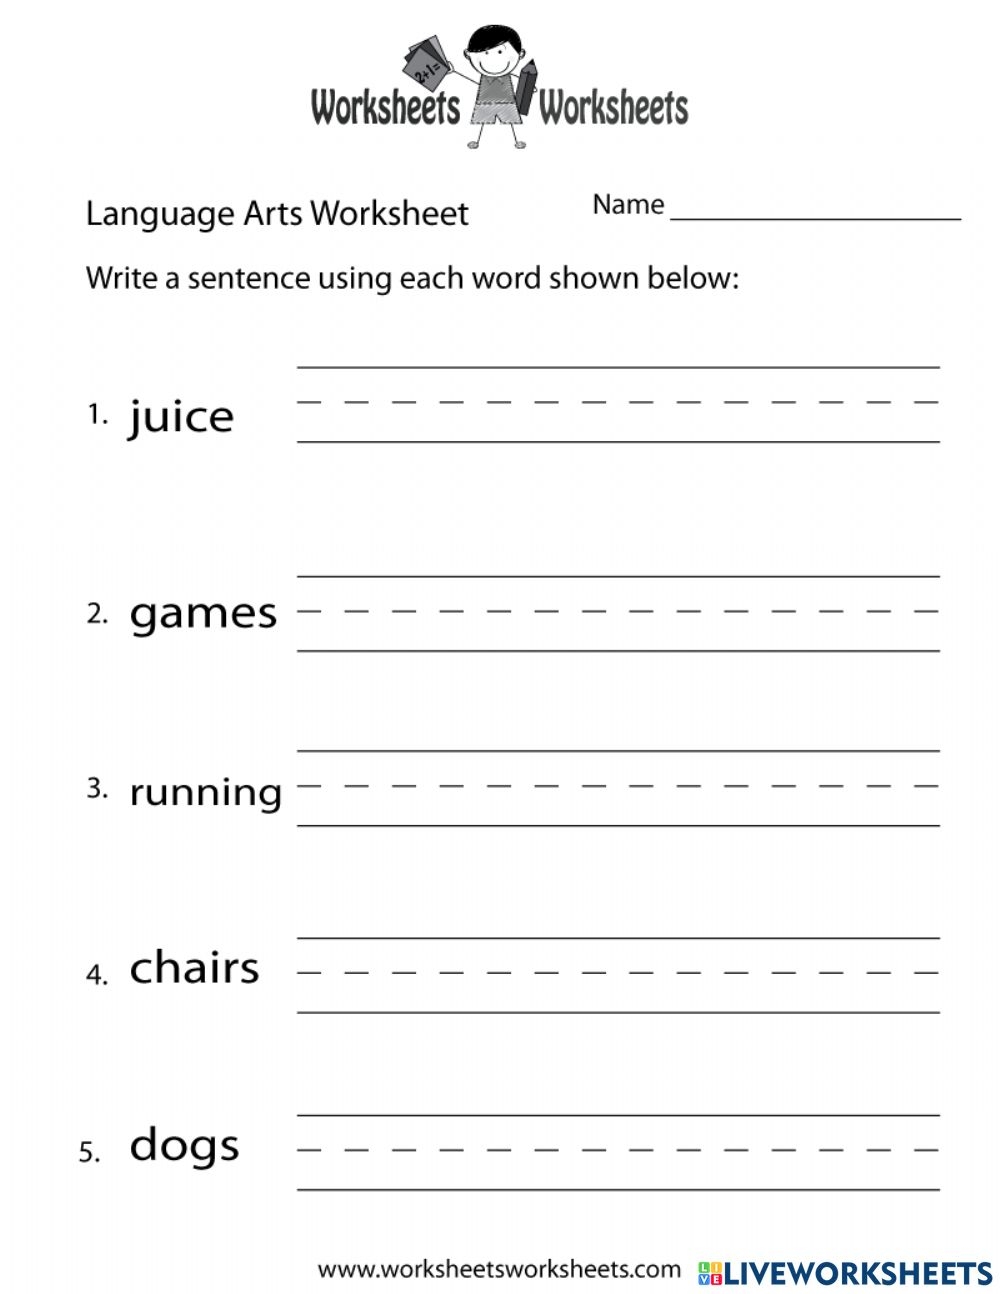 sentence-writing-worksheets-pdf-printable-worksheets